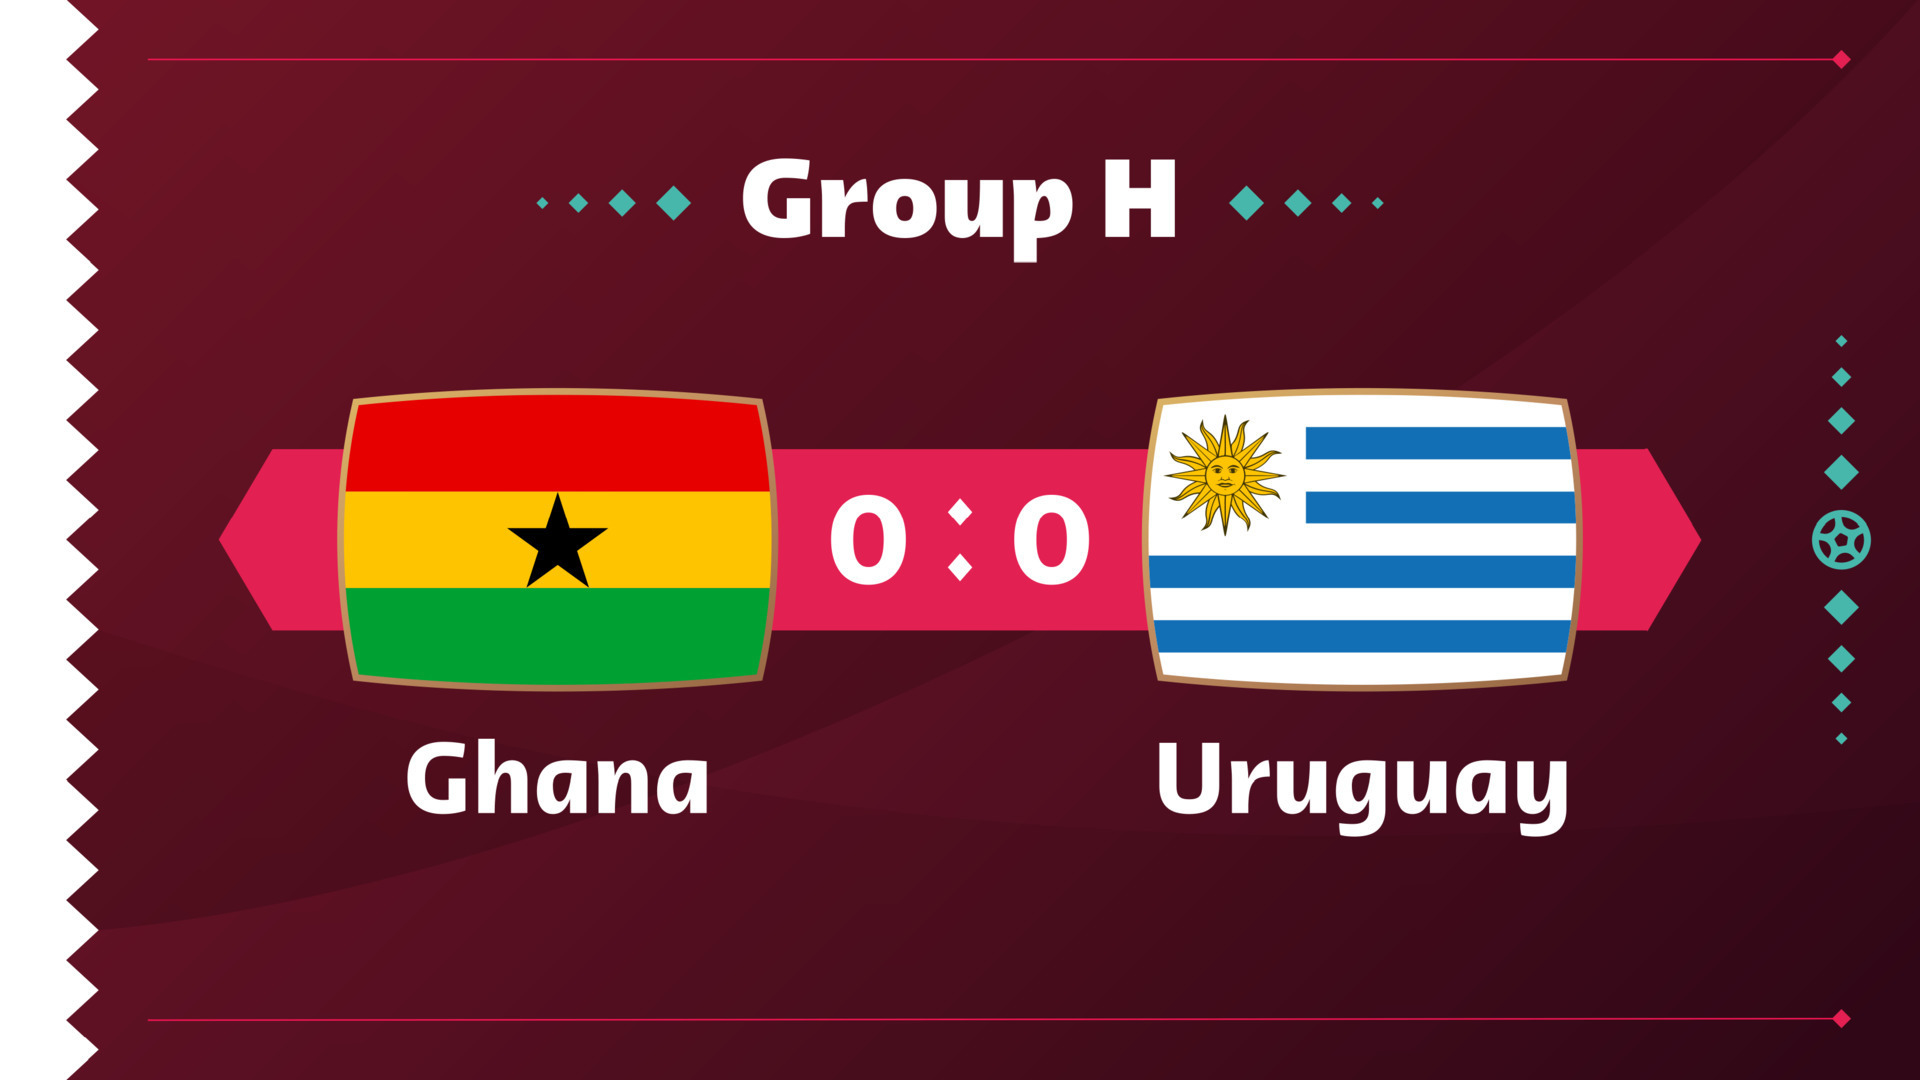  Regardez en direct Uruguay vs Ghana Diffusion en direct Yalla Shot Today Qatar World Cup 2022